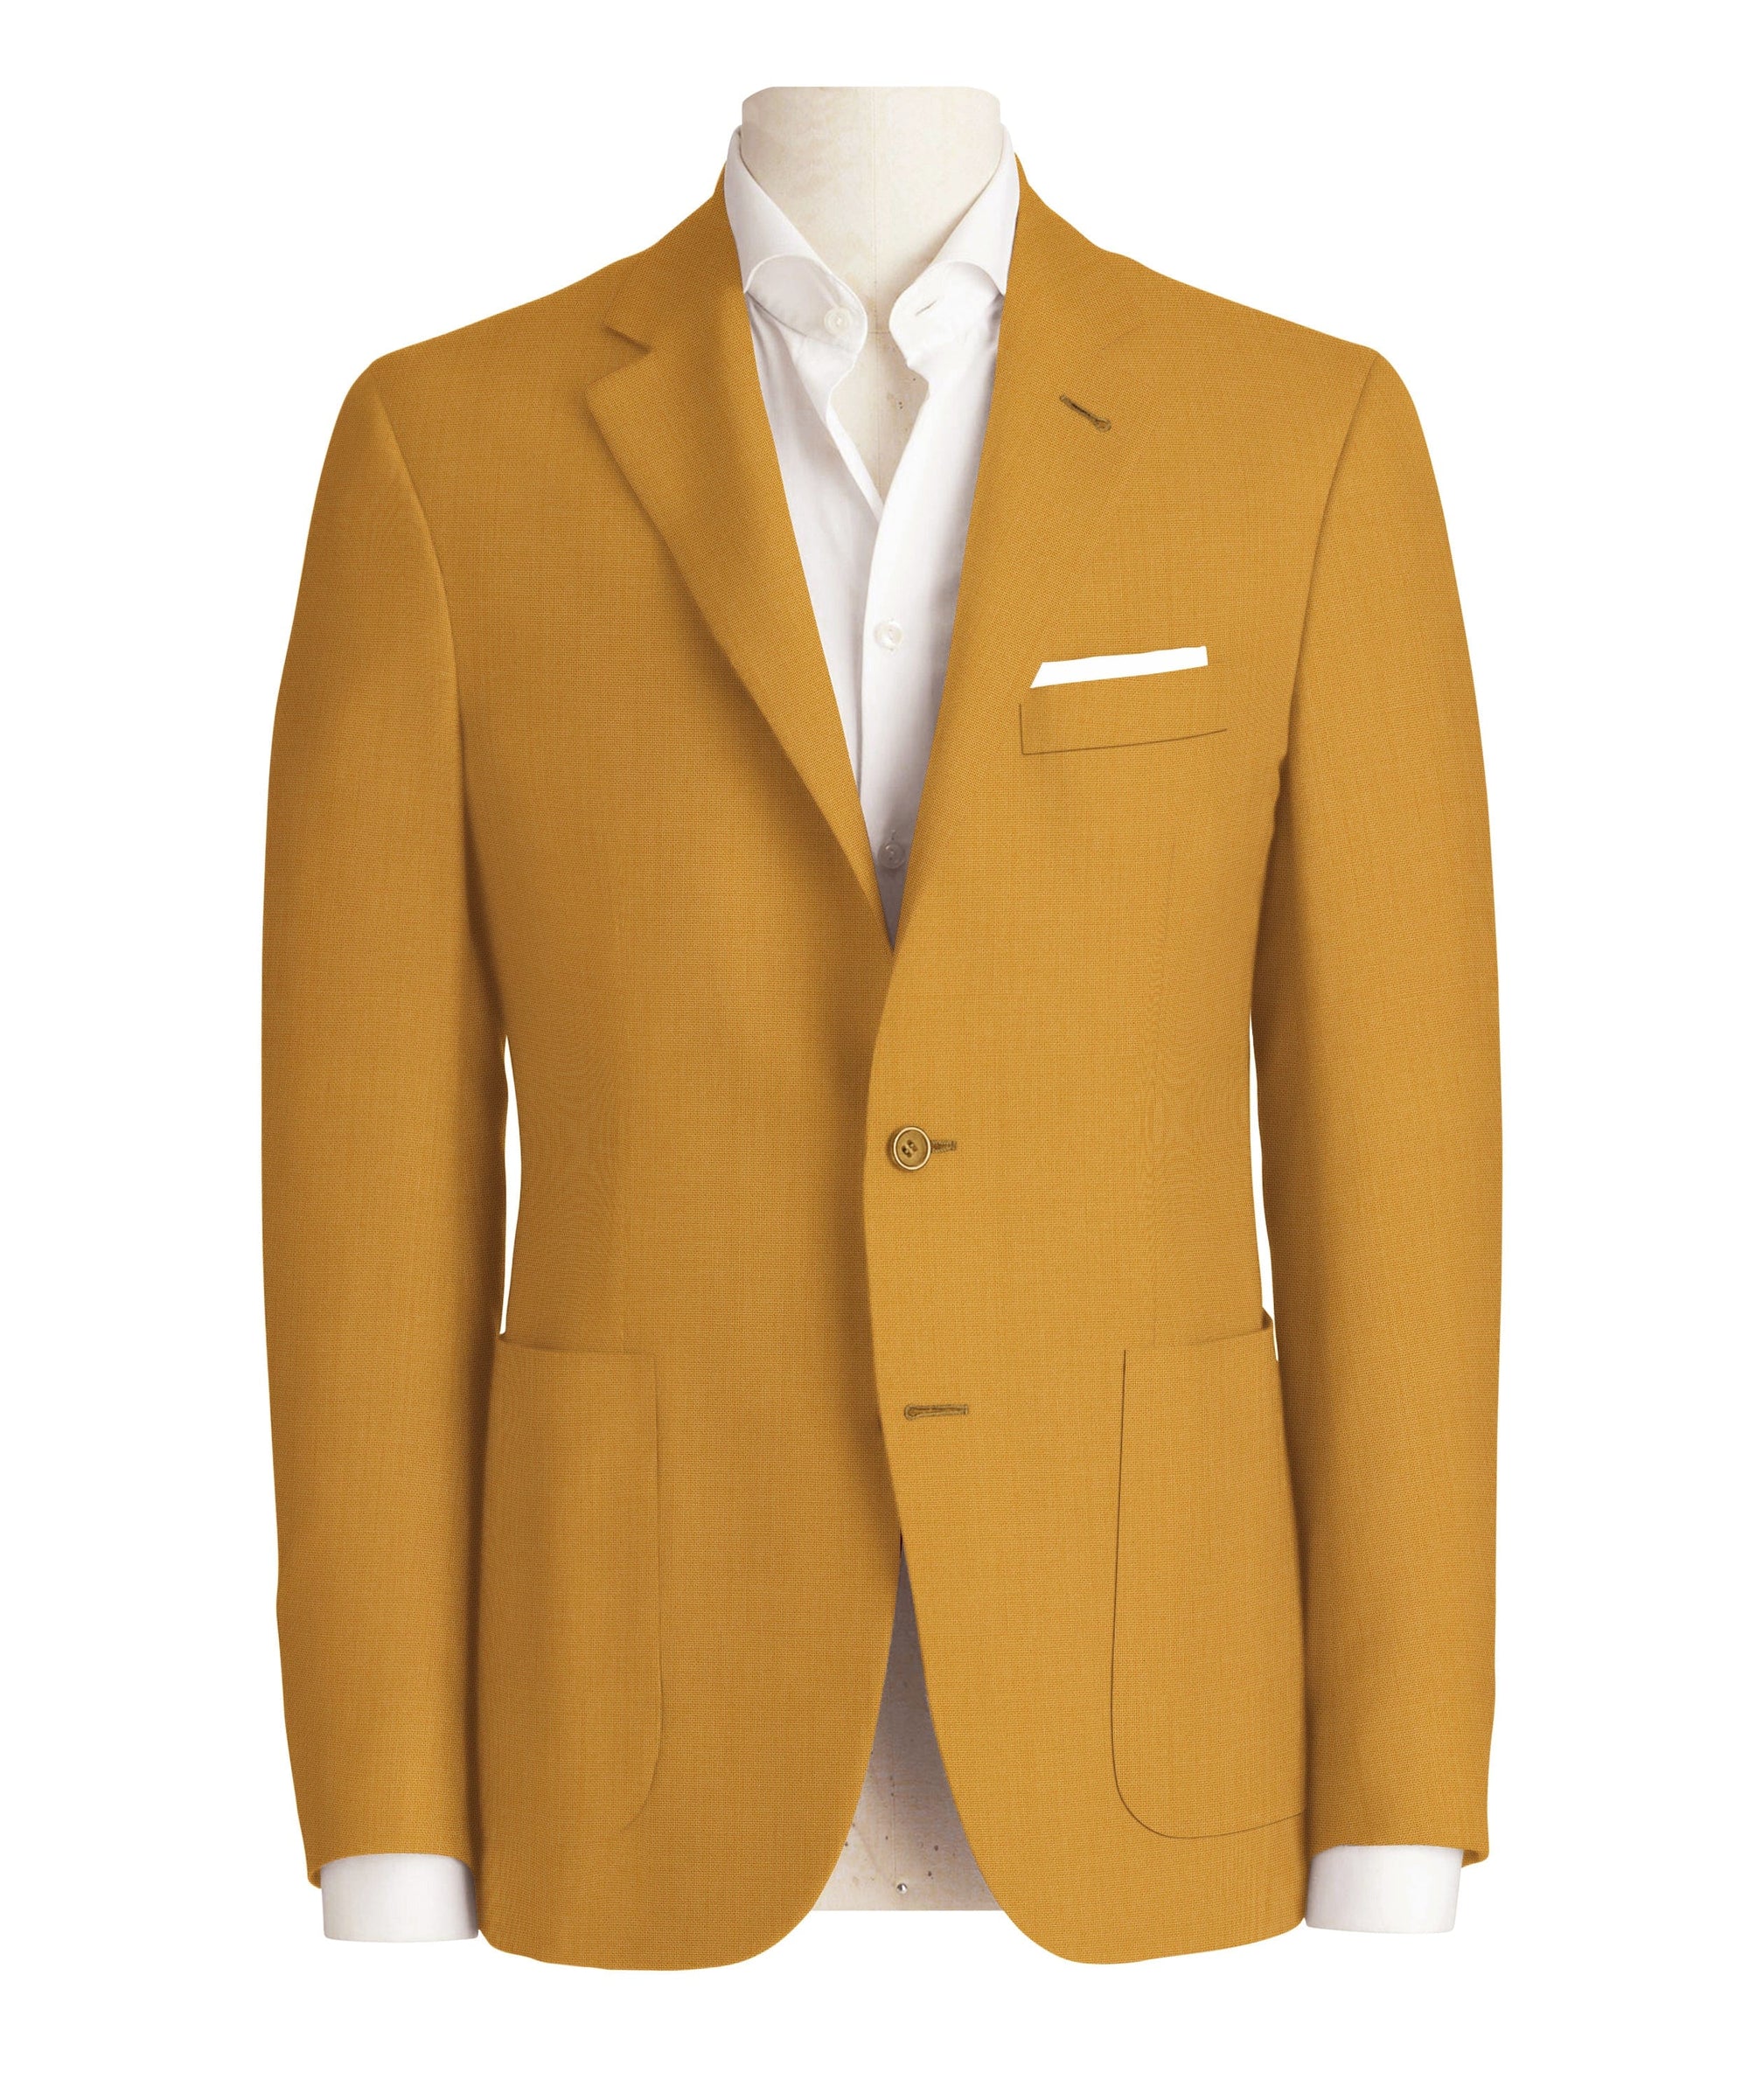 Saffron Yellow Jacket